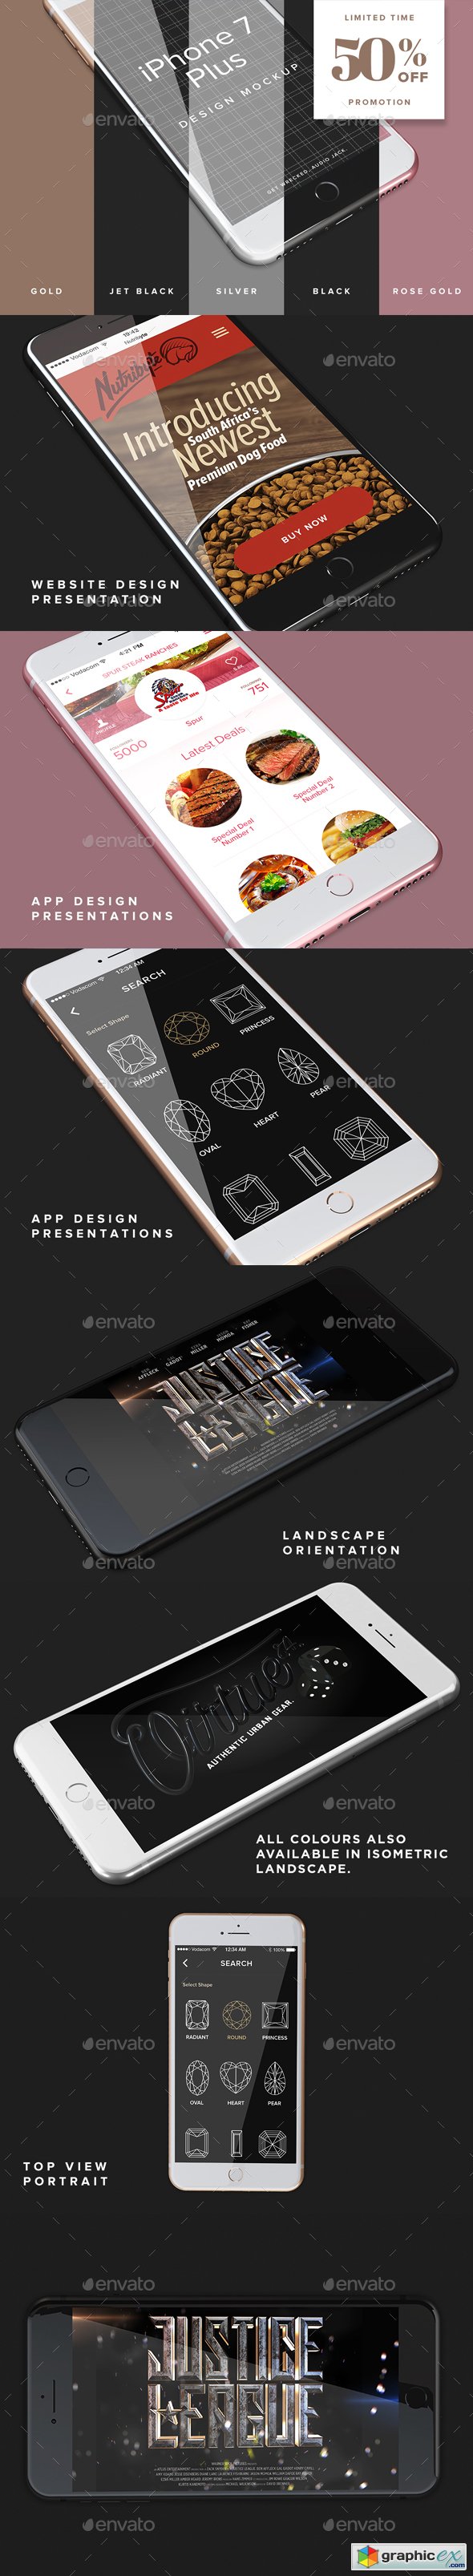 iPhone 7 Design Mockup